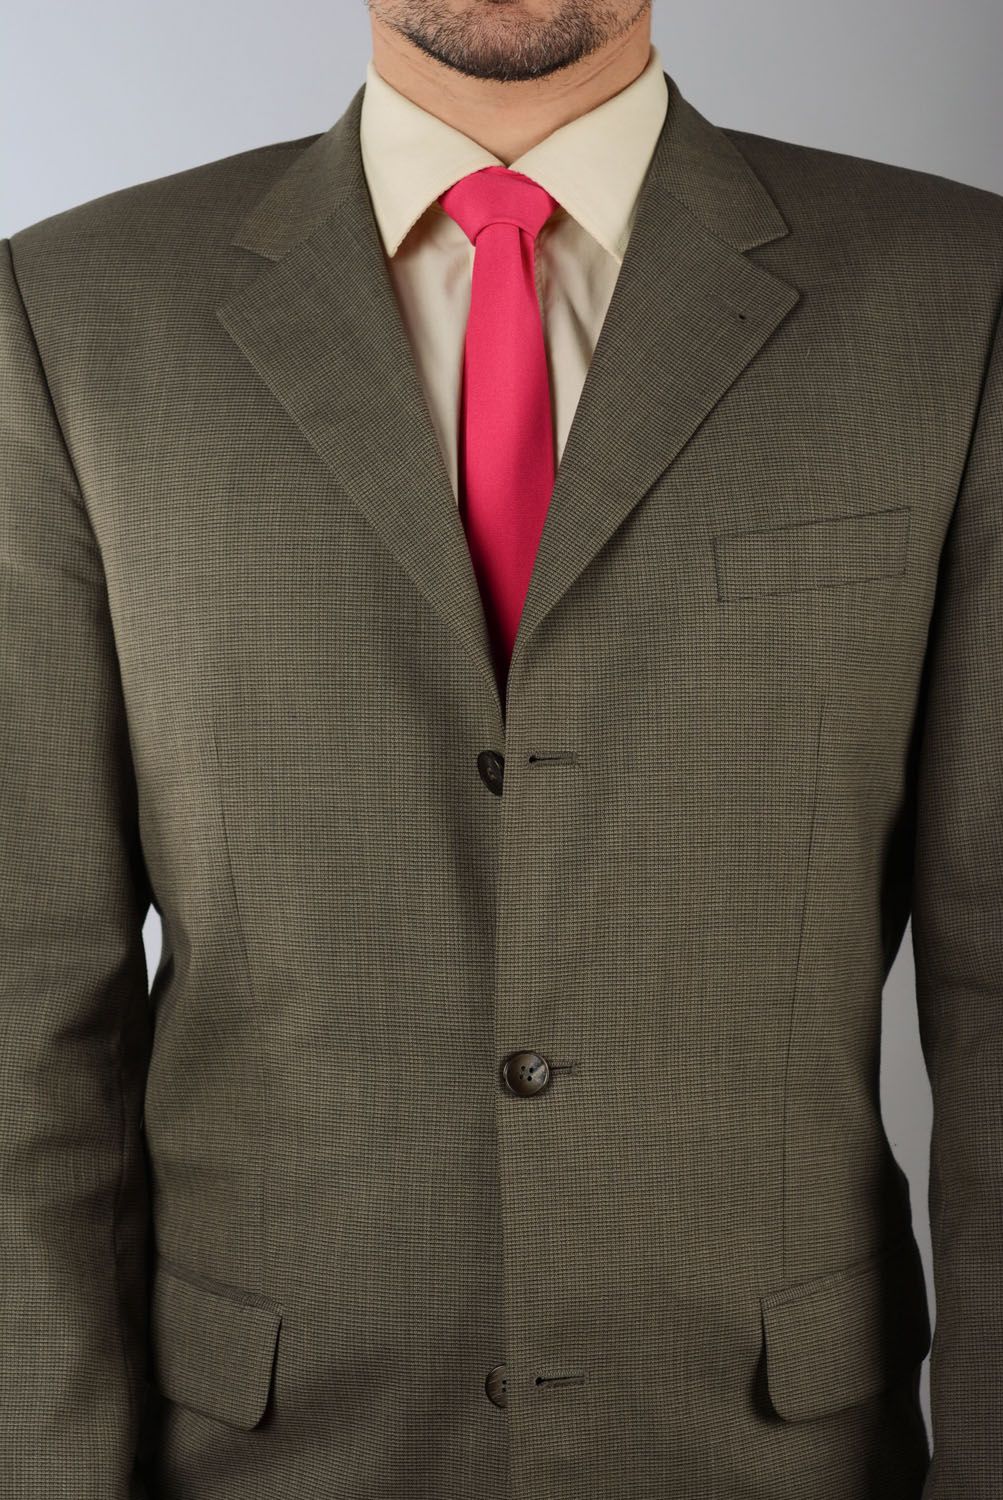 Cravate en gabardine rose vif faite main photo 4